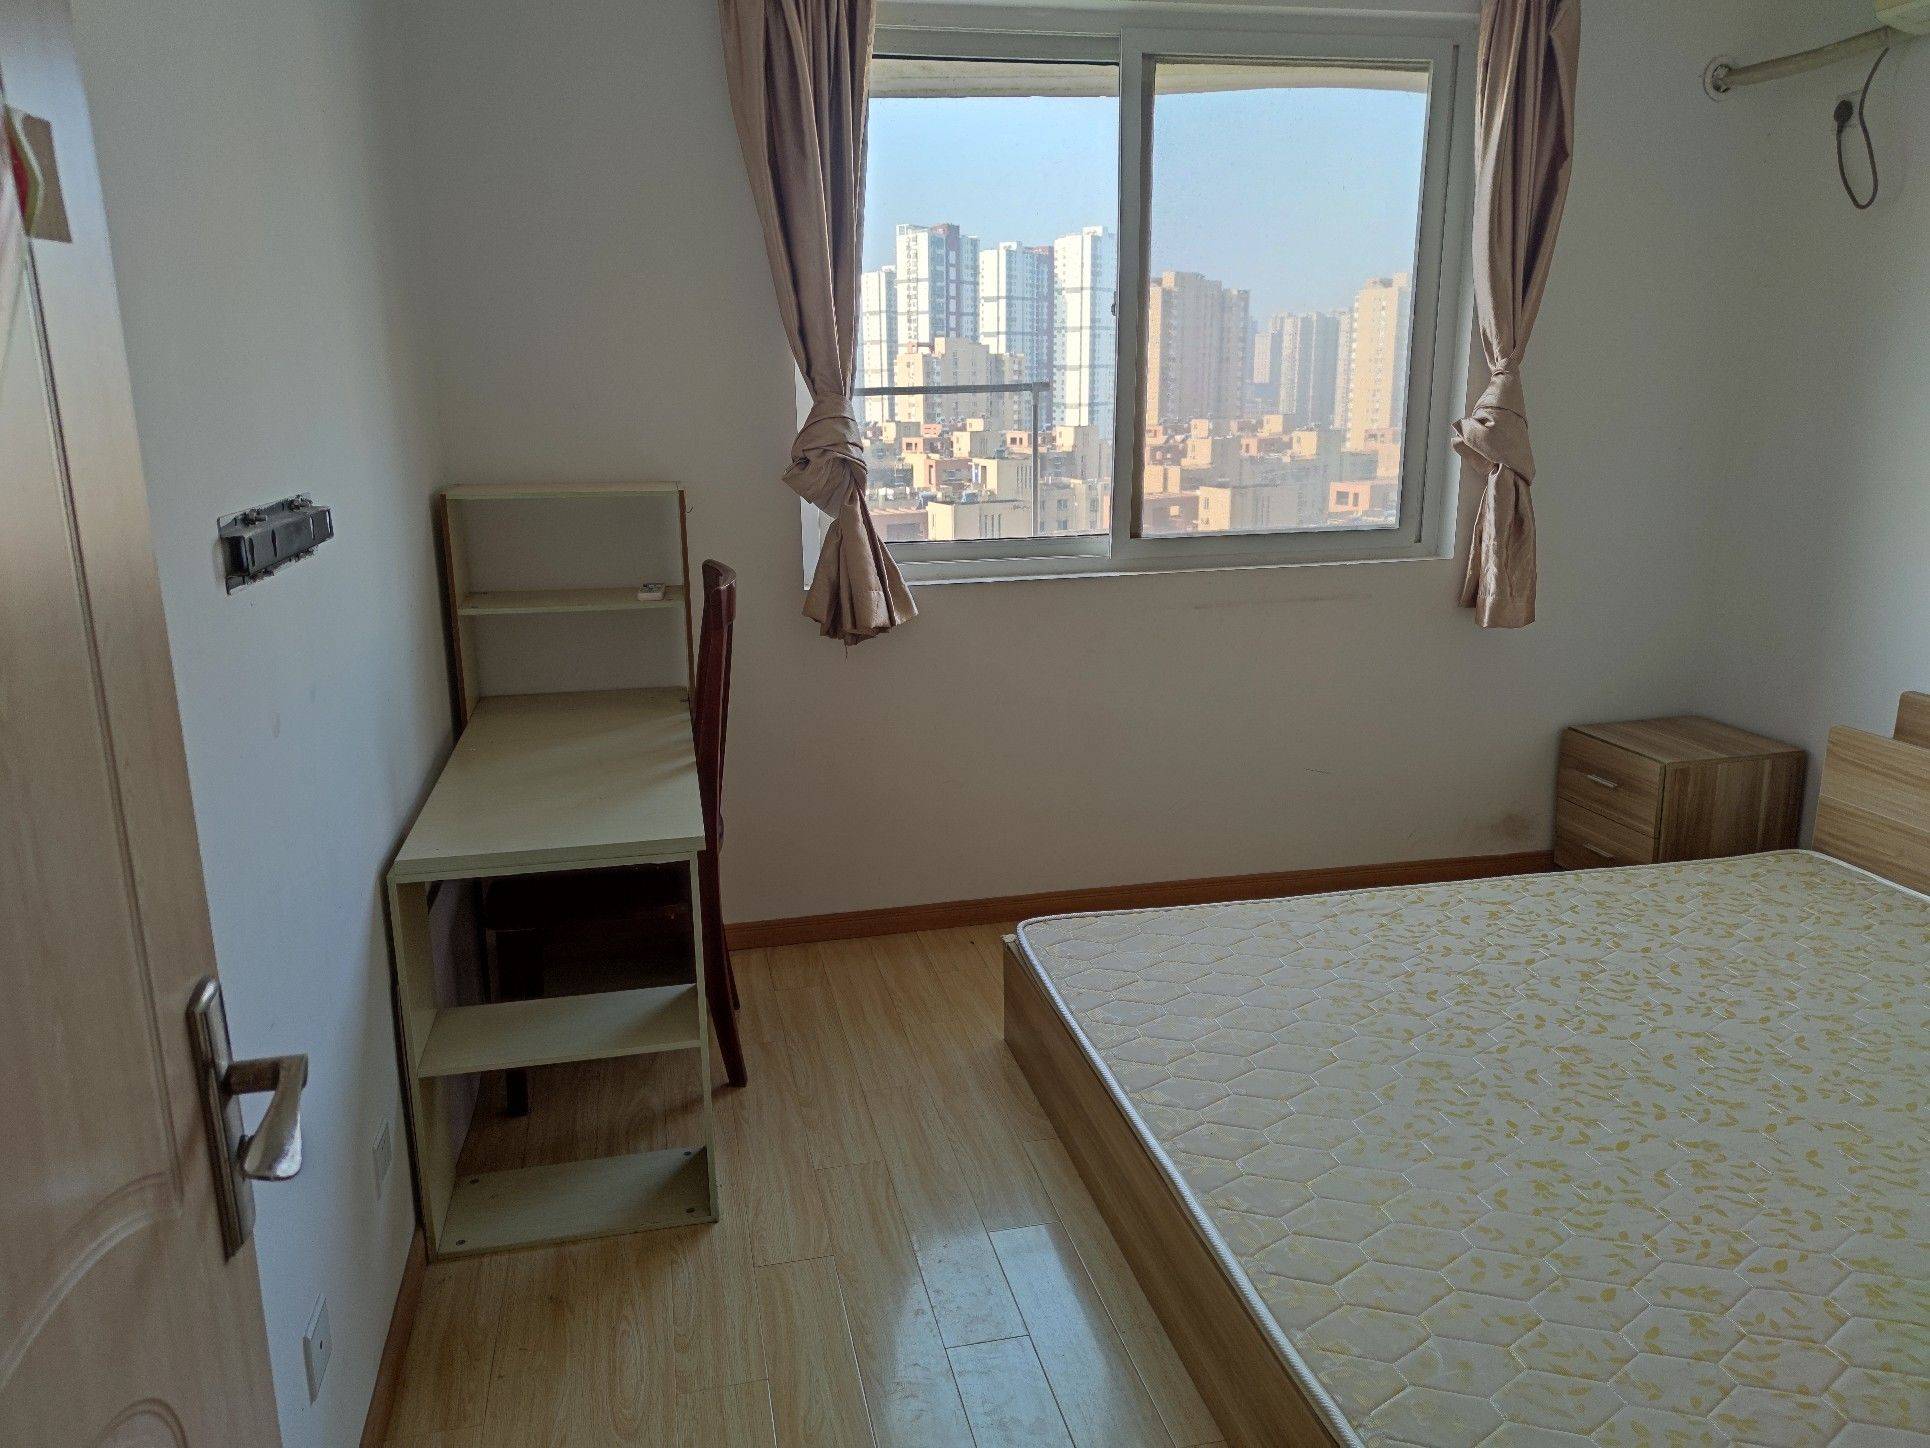 Nanjing-Jianye-Cozy Home,Clean&Comfy,No Gender Limit